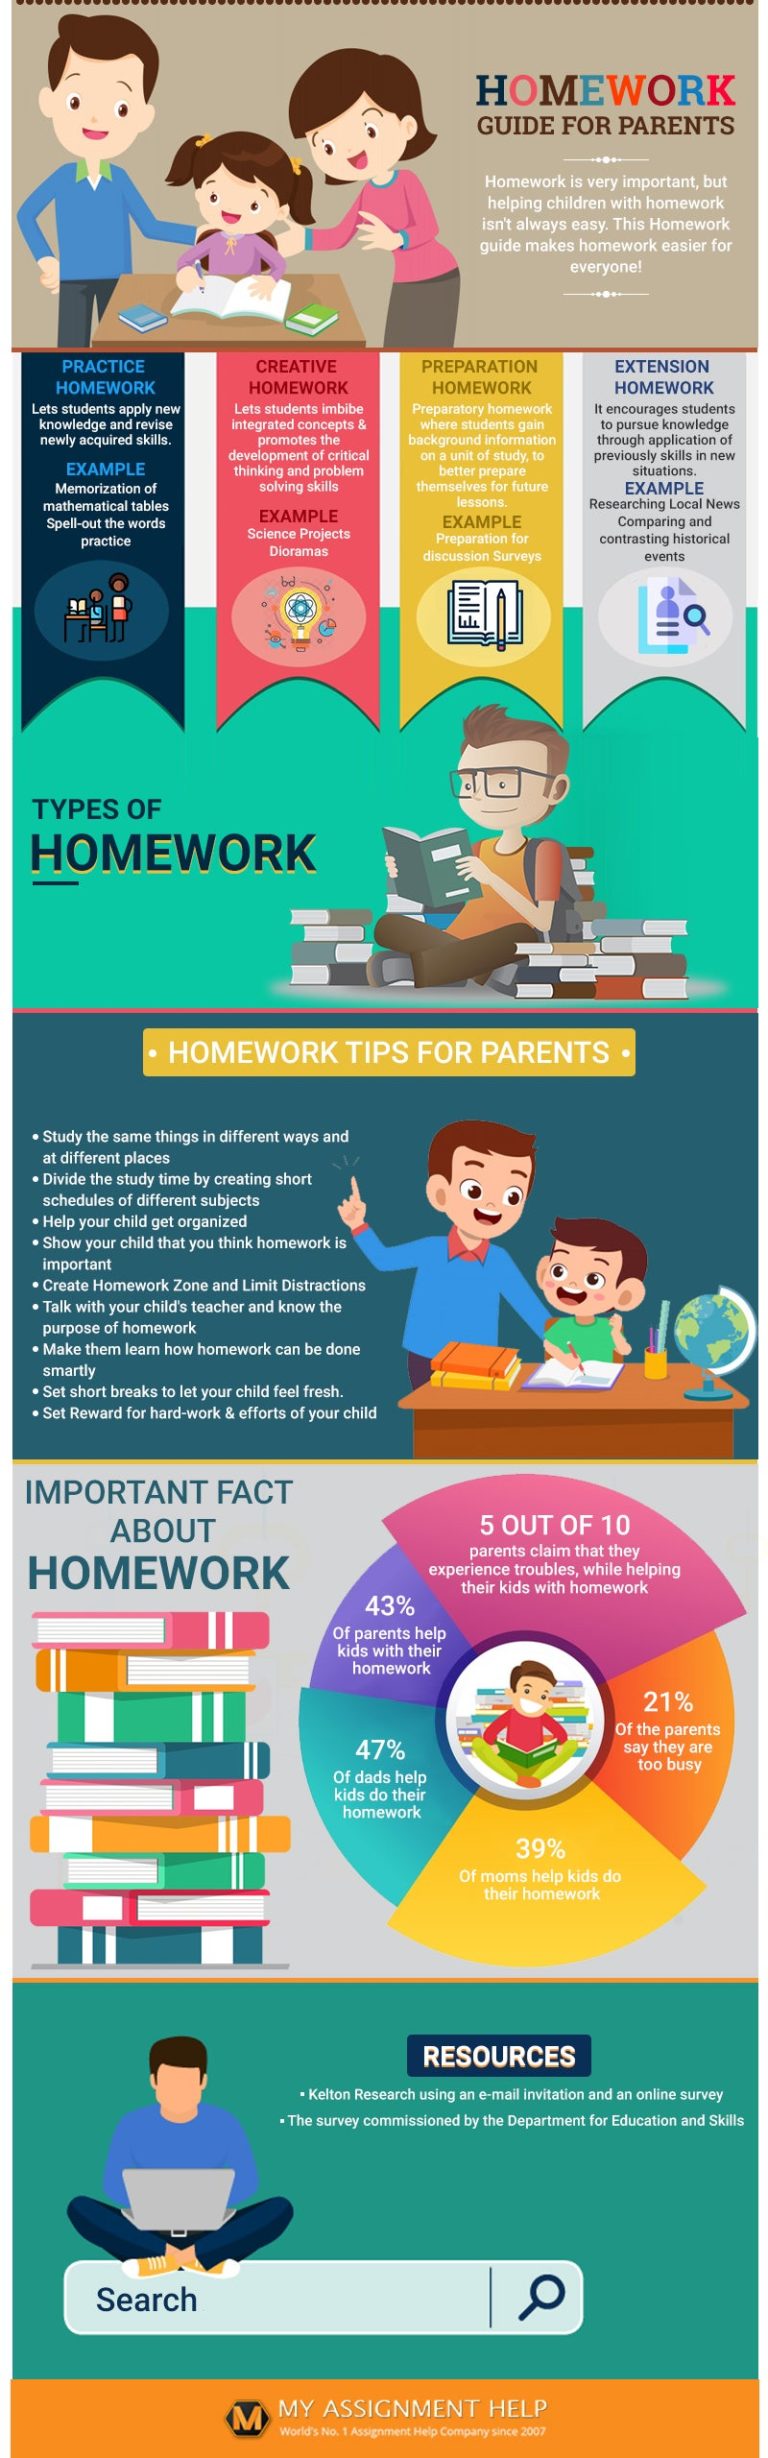 info on homework